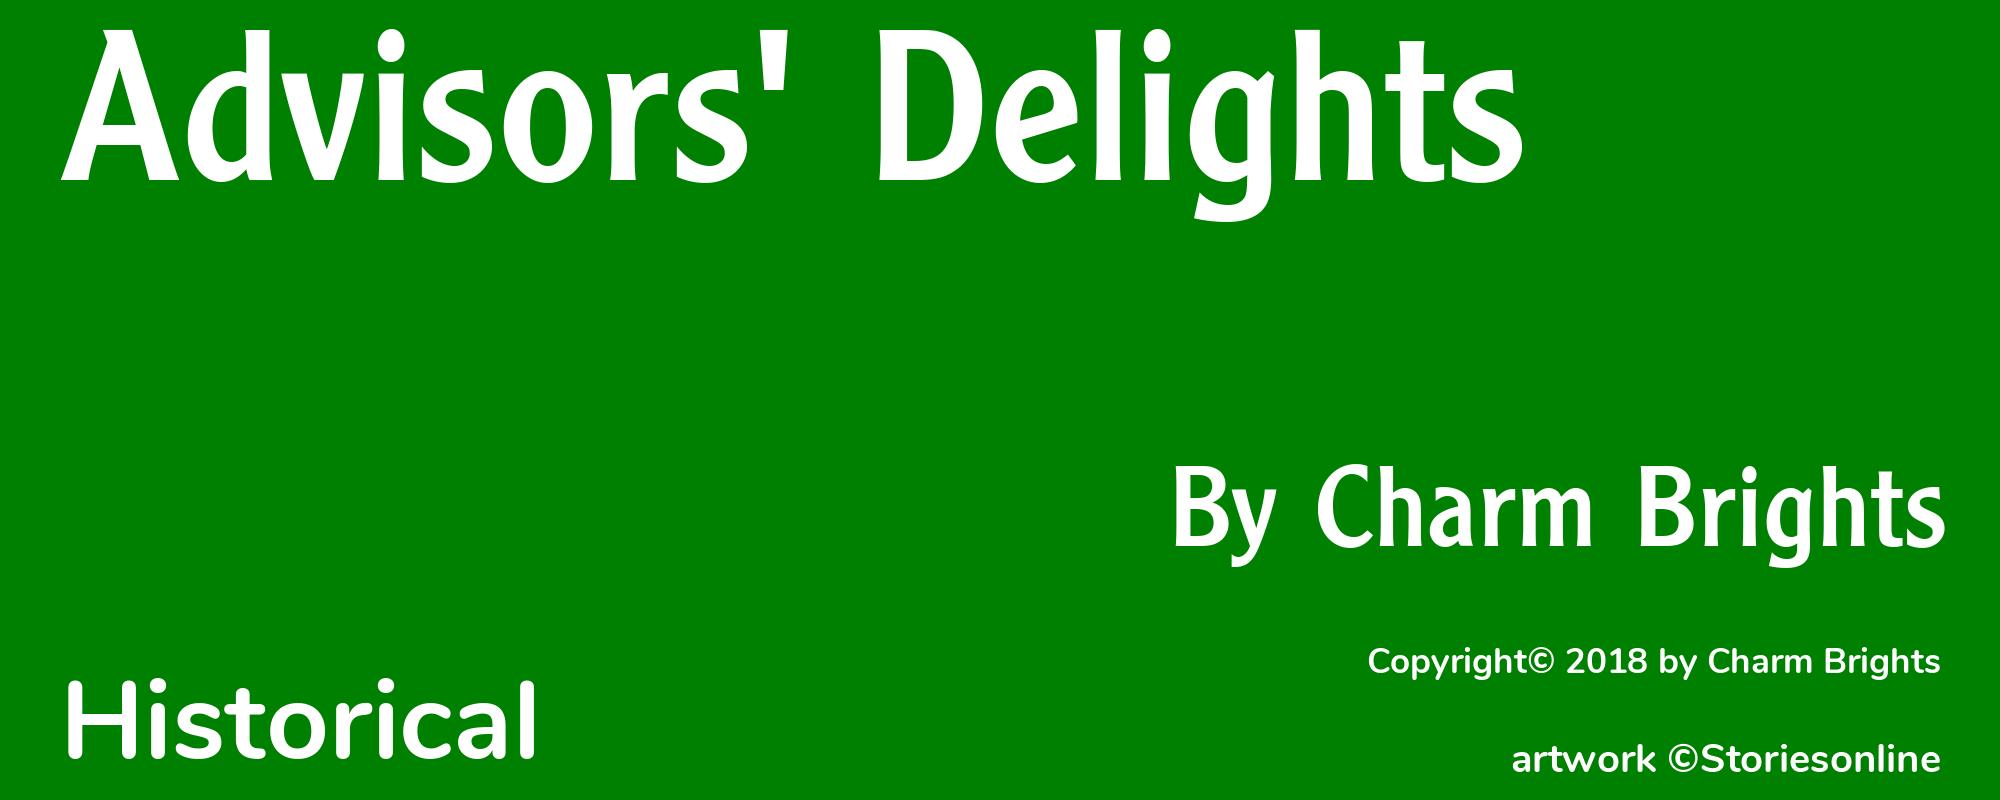 Advisors' Delights - Cover